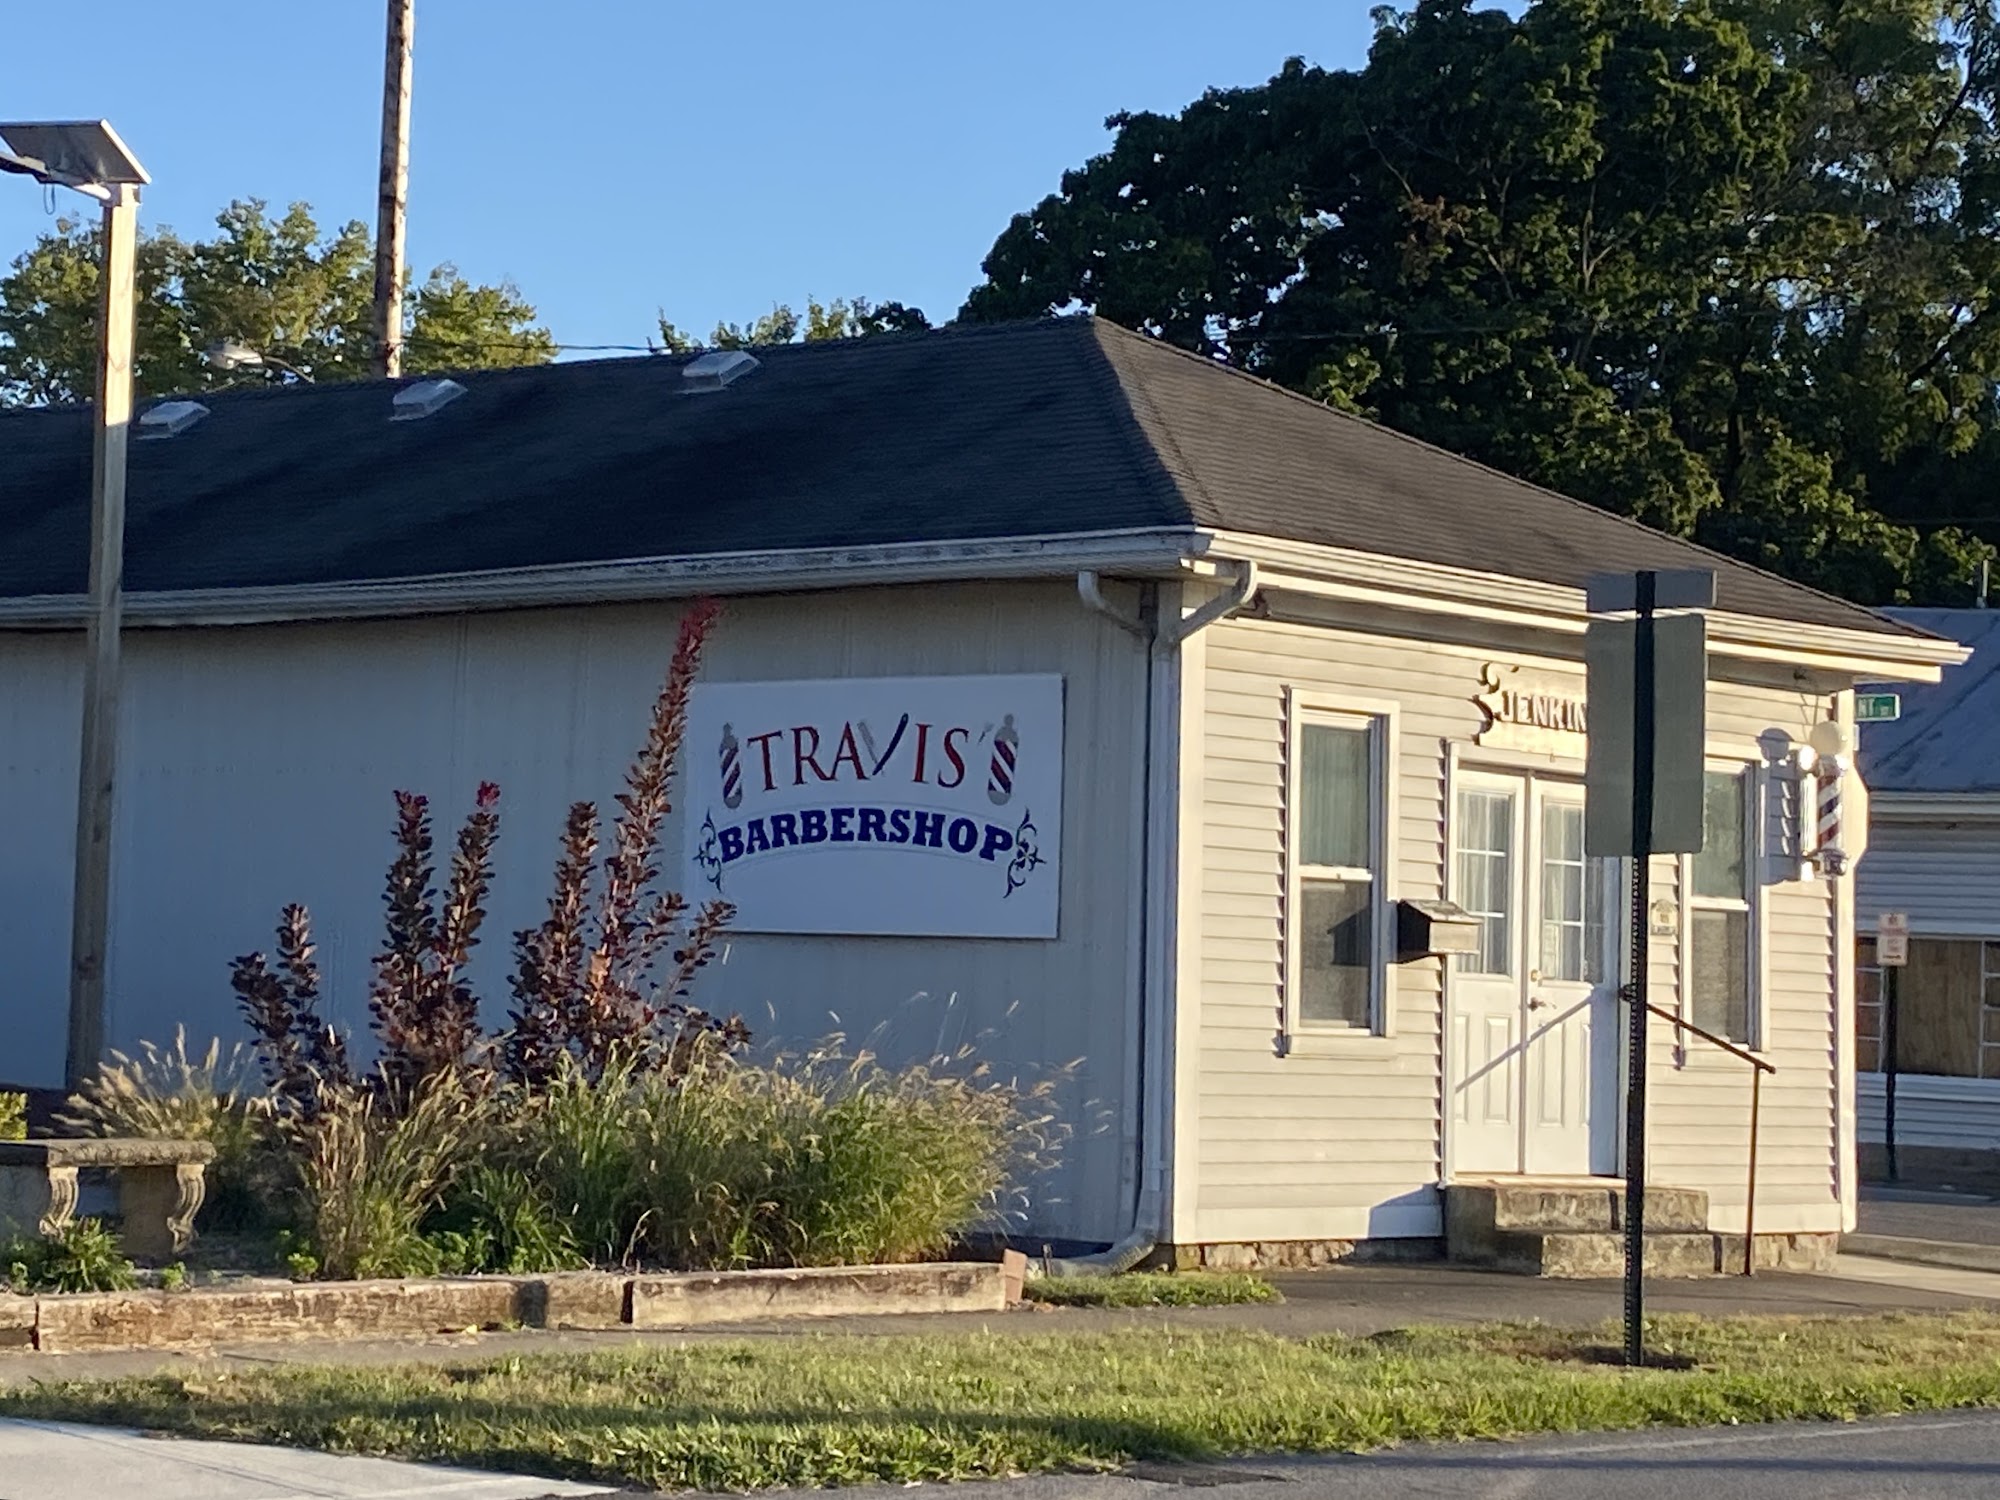 Travis' Barbershop 103 E Main St, Enon Ohio 45323